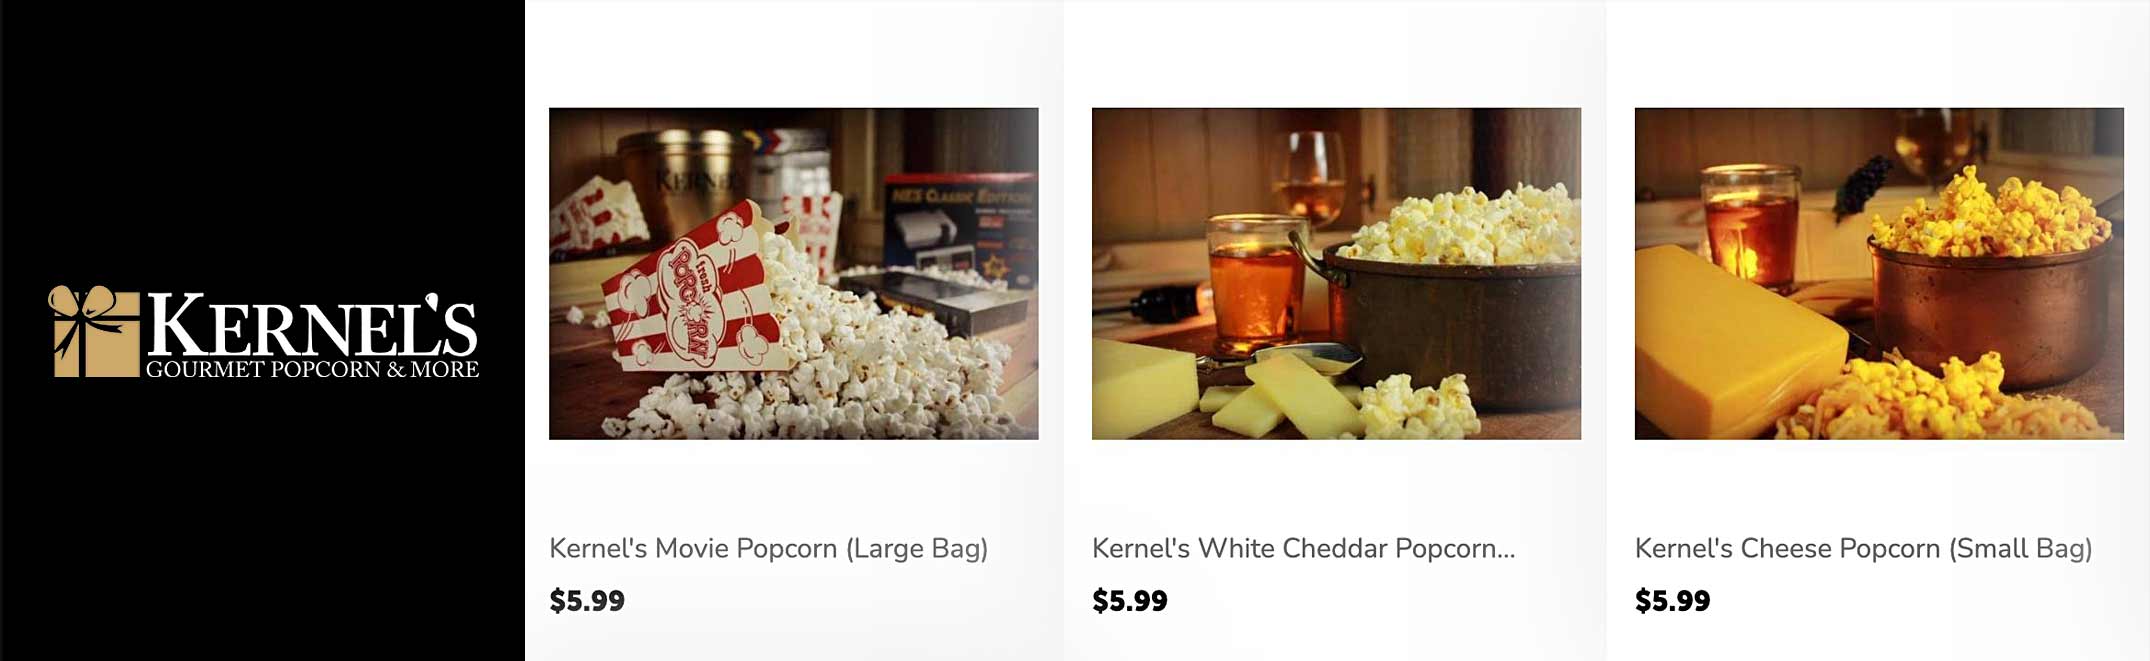 shop-kernels-gourmet-popcorn-downtown-geneva-banner-1-spots-on-the-fox.jpg?1630779535314